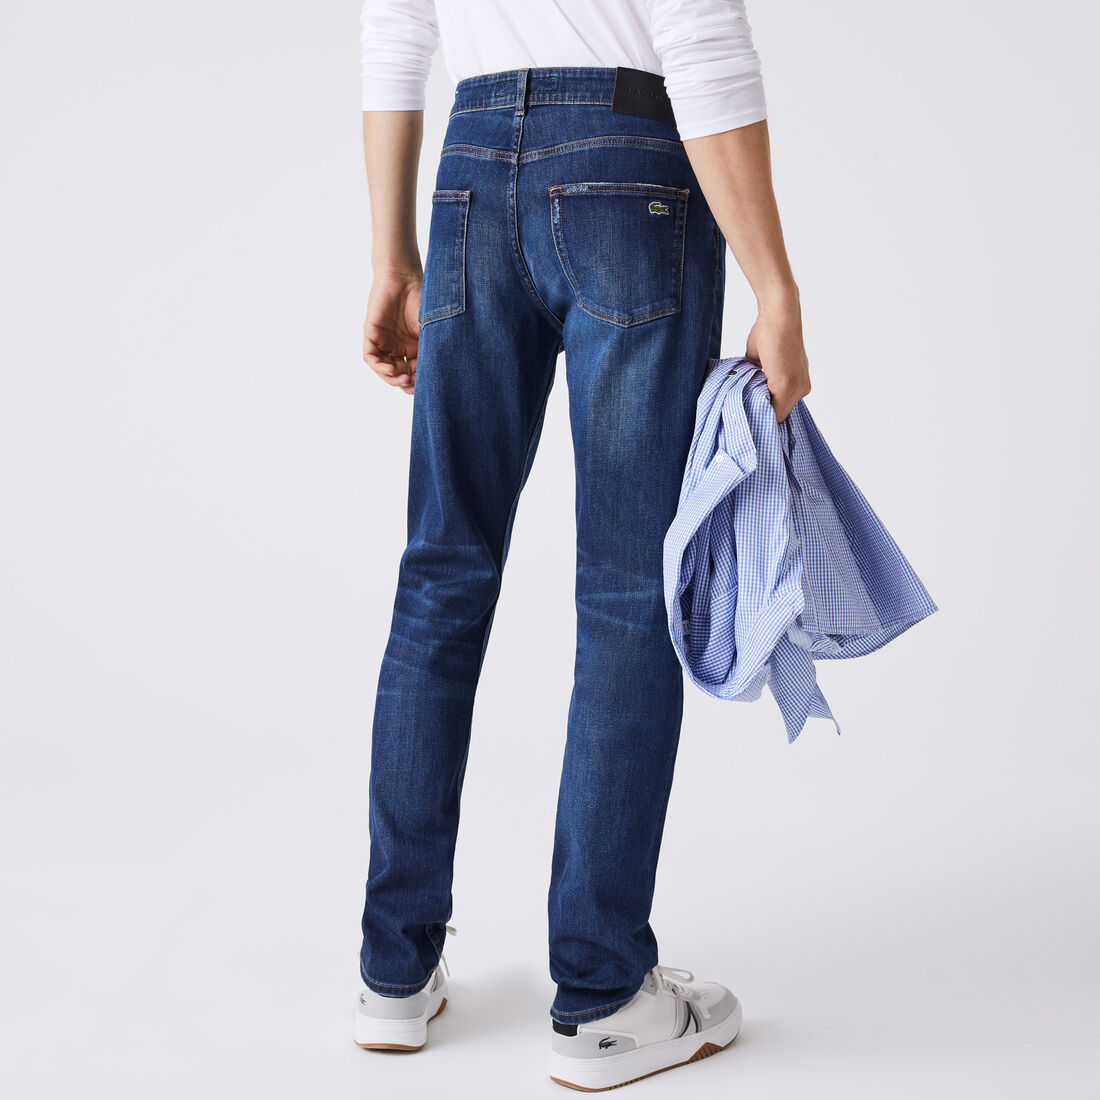 Lacoste Slim Fit Stretch Baumwoll Denim Jeans Herren Blau | RUWK-86149